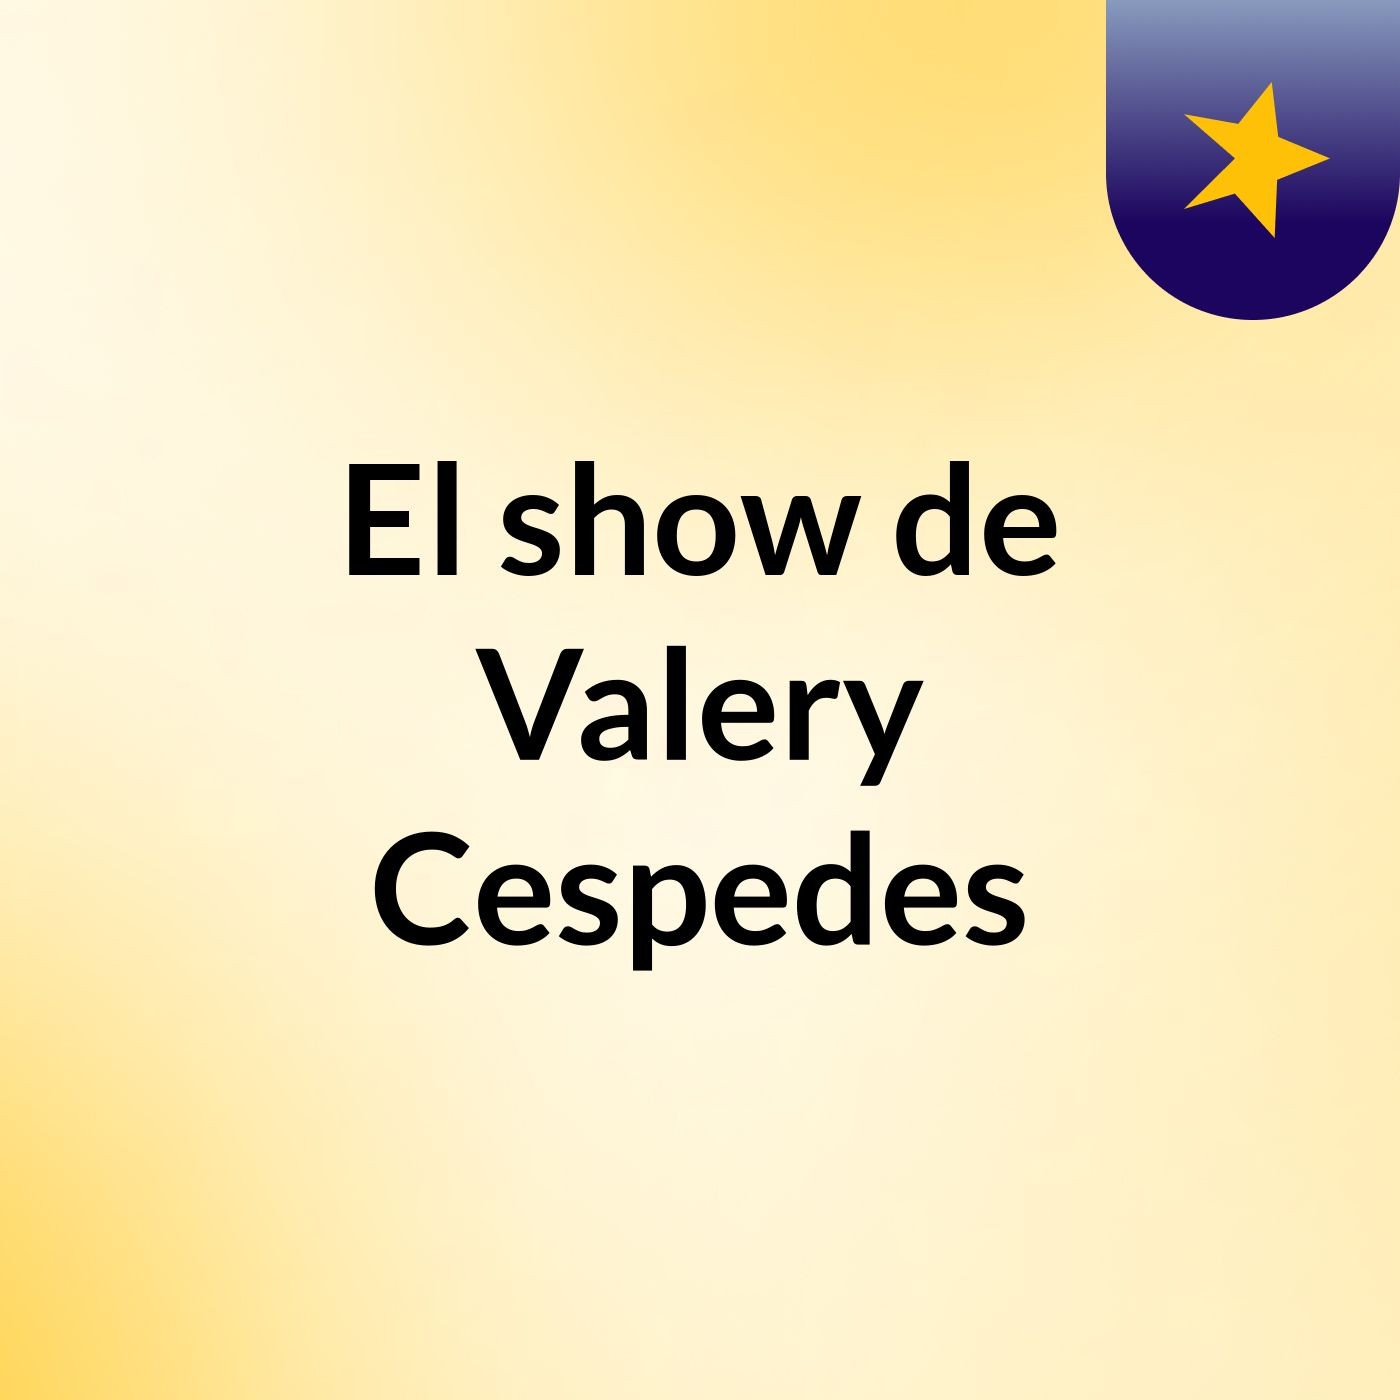 El show de Valery Cespedes